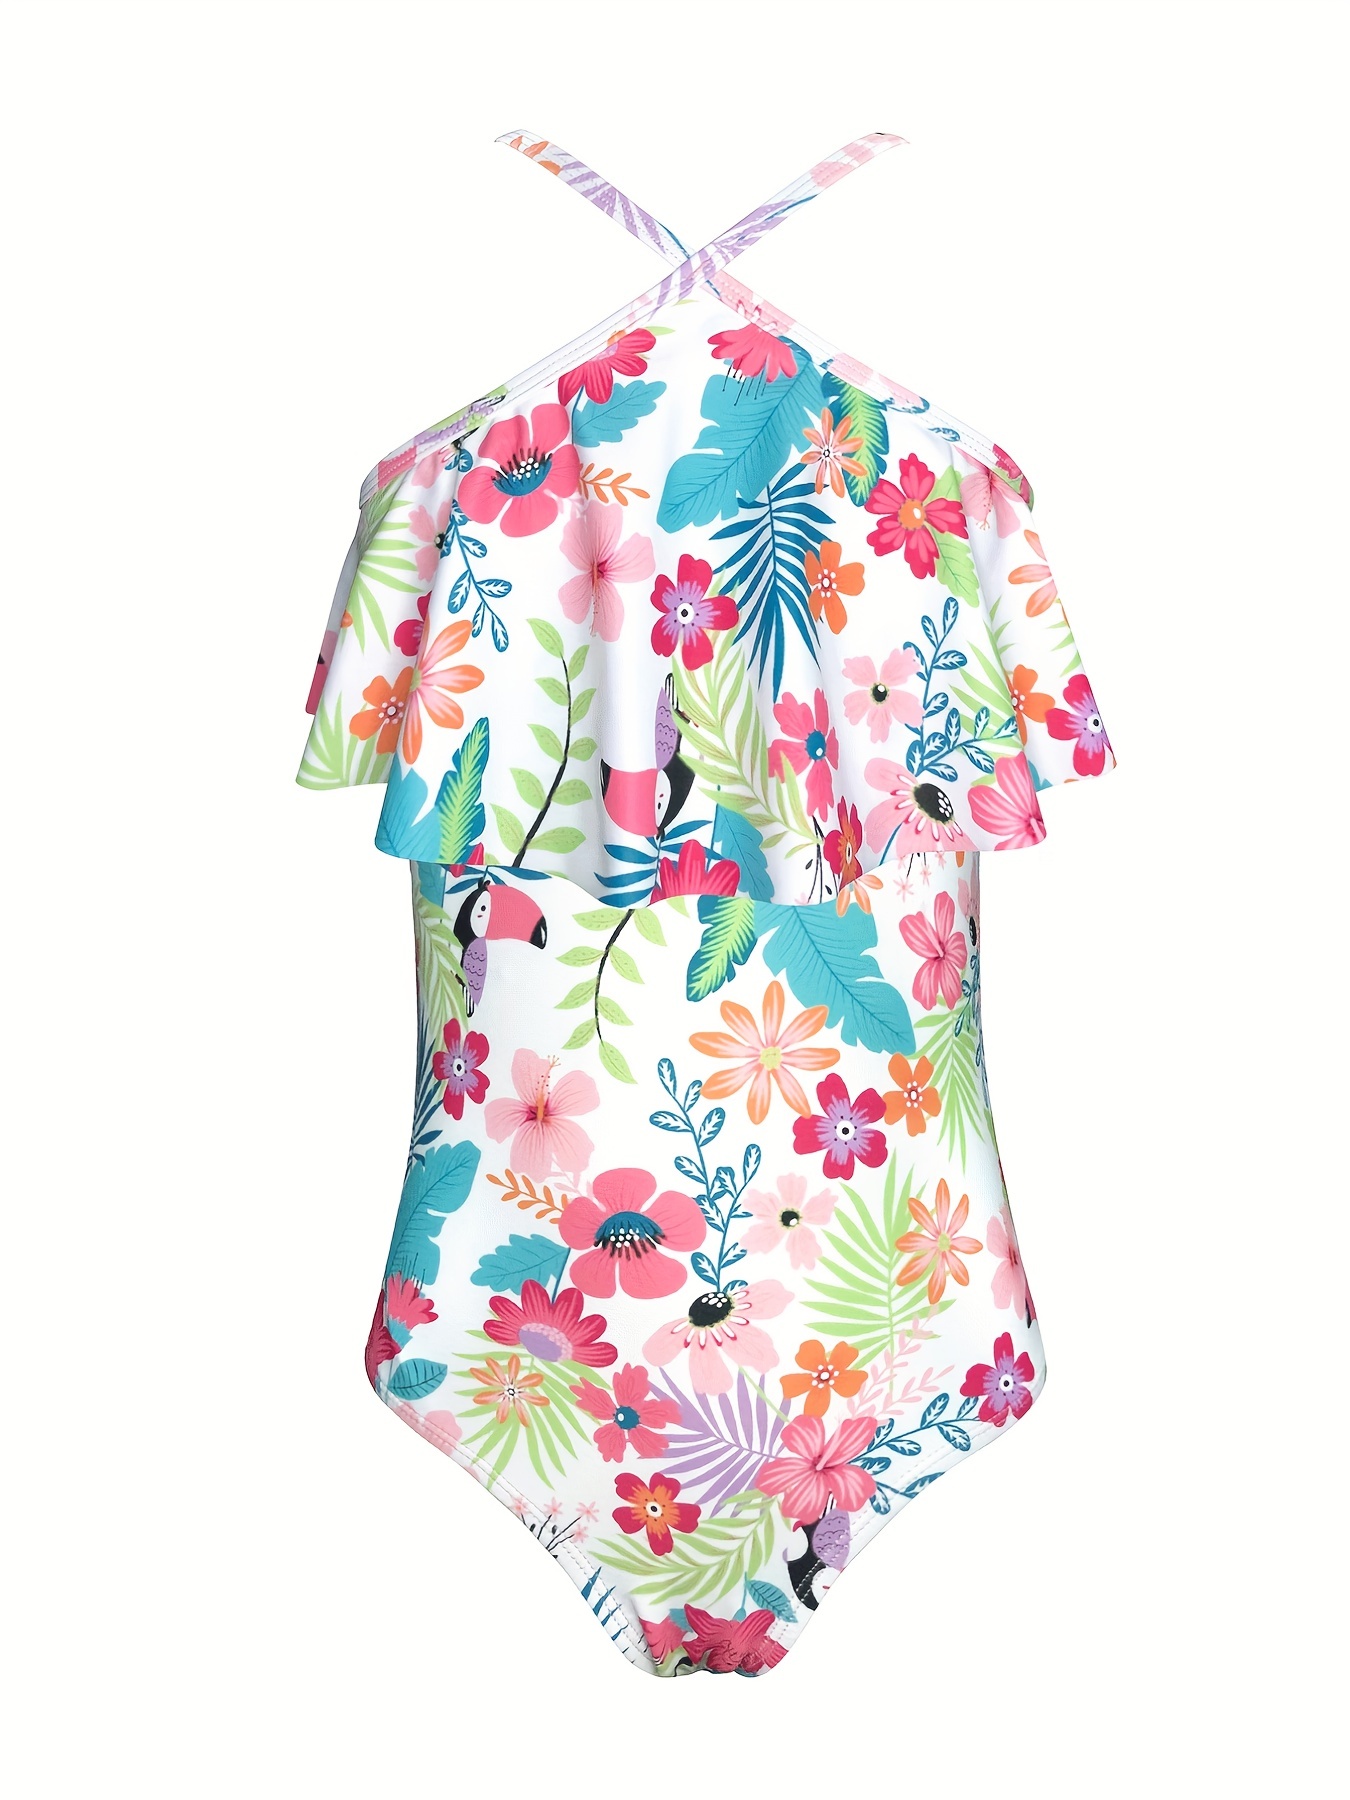 Buy SHEKINI Girls Leopard Print Bathing Suits Ruffle One Piece Swimsuits  Cute Beachwear, Lemon Yellow, 6 Years at